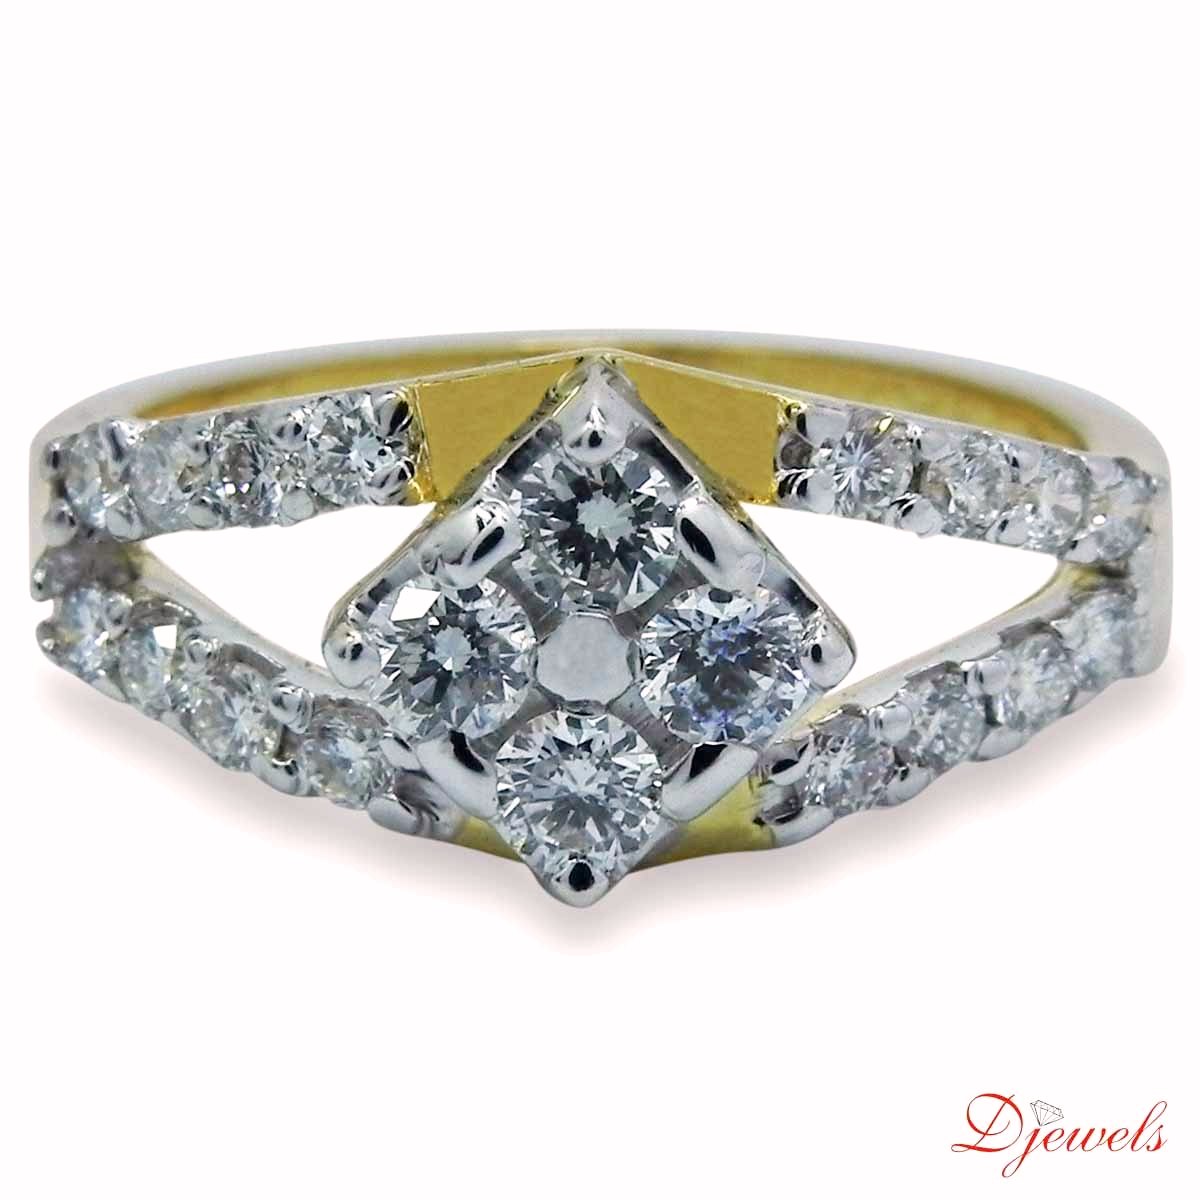 Designer Diamond Ring in 14K Hm GoldBuy and SellJewelryCentral DelhiKarol Bagh